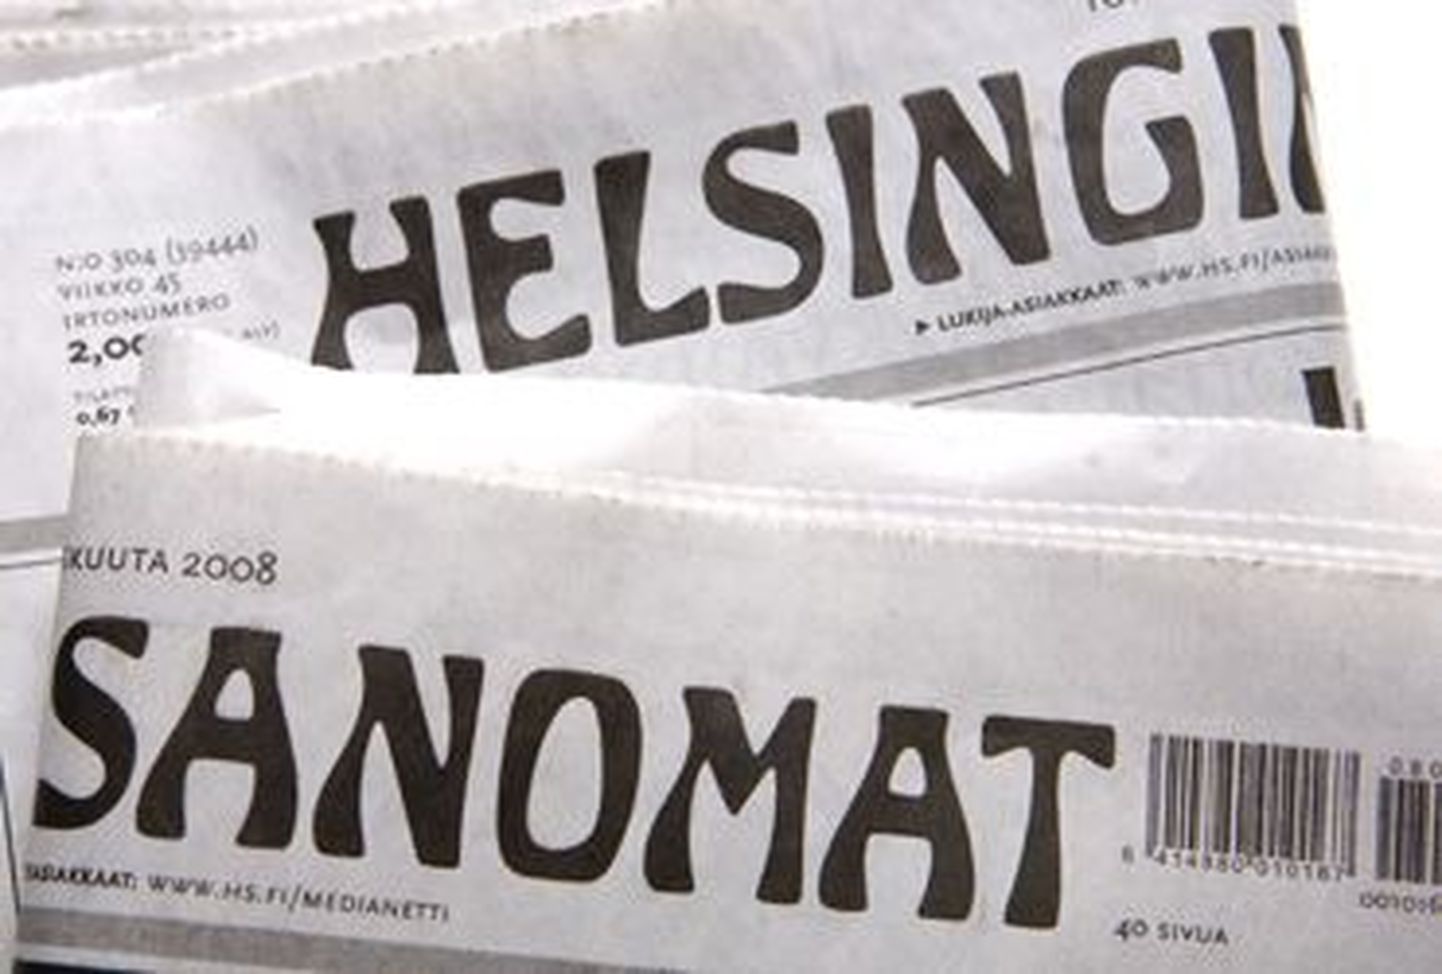 Helsingin Sanomat - крупнейшая в Финляндии газета.